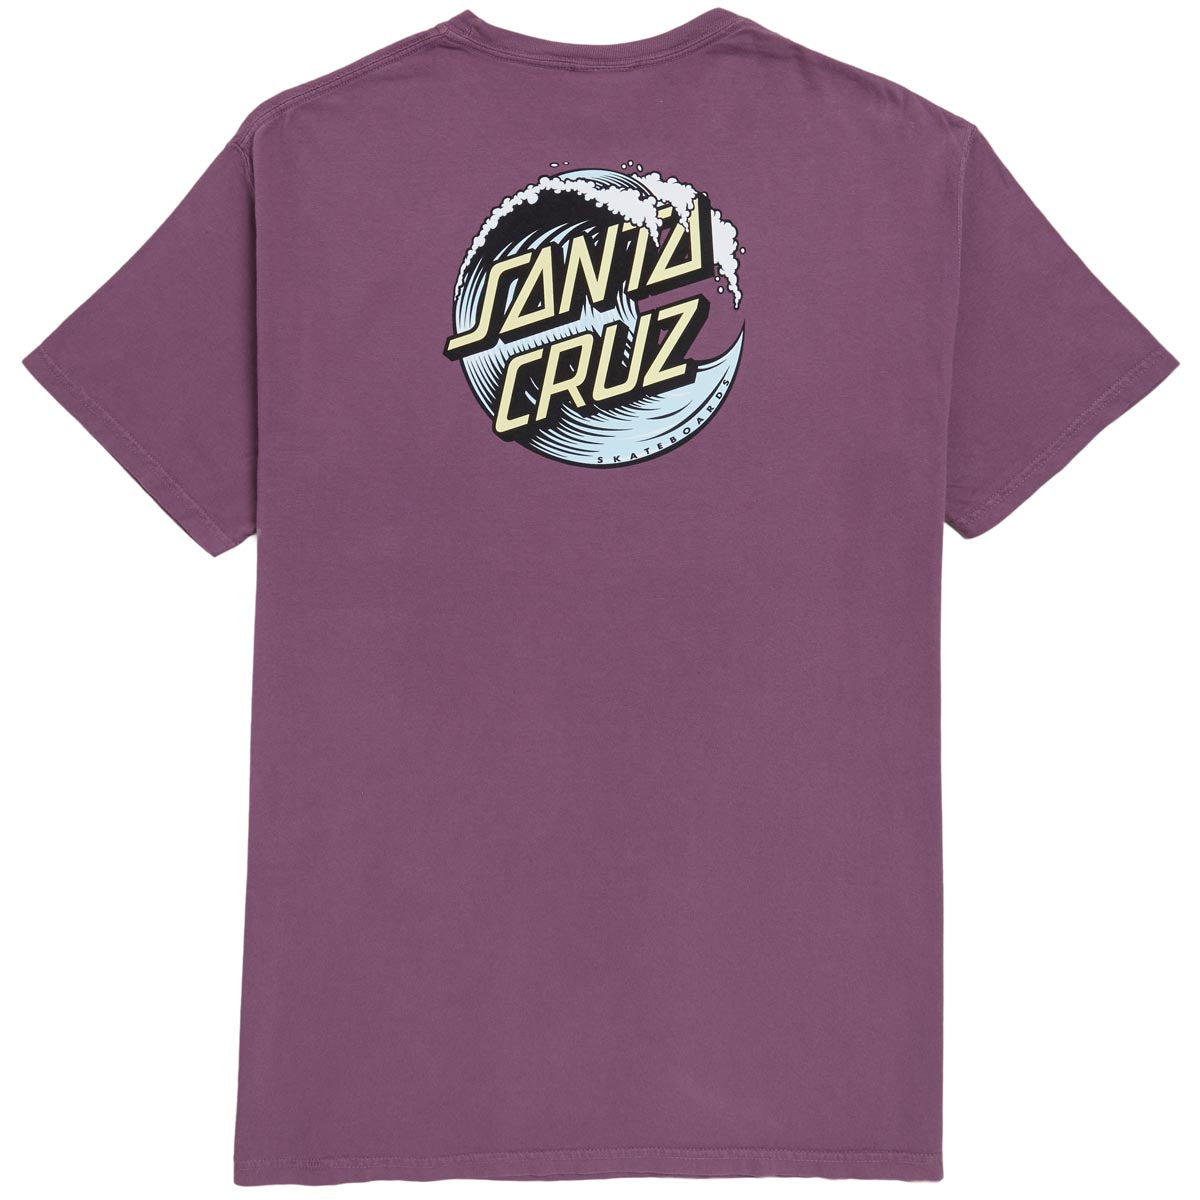 Santa Cruz Womens Other Dot Boyfriend T-Shirt - Purple Plum Raisin image 2